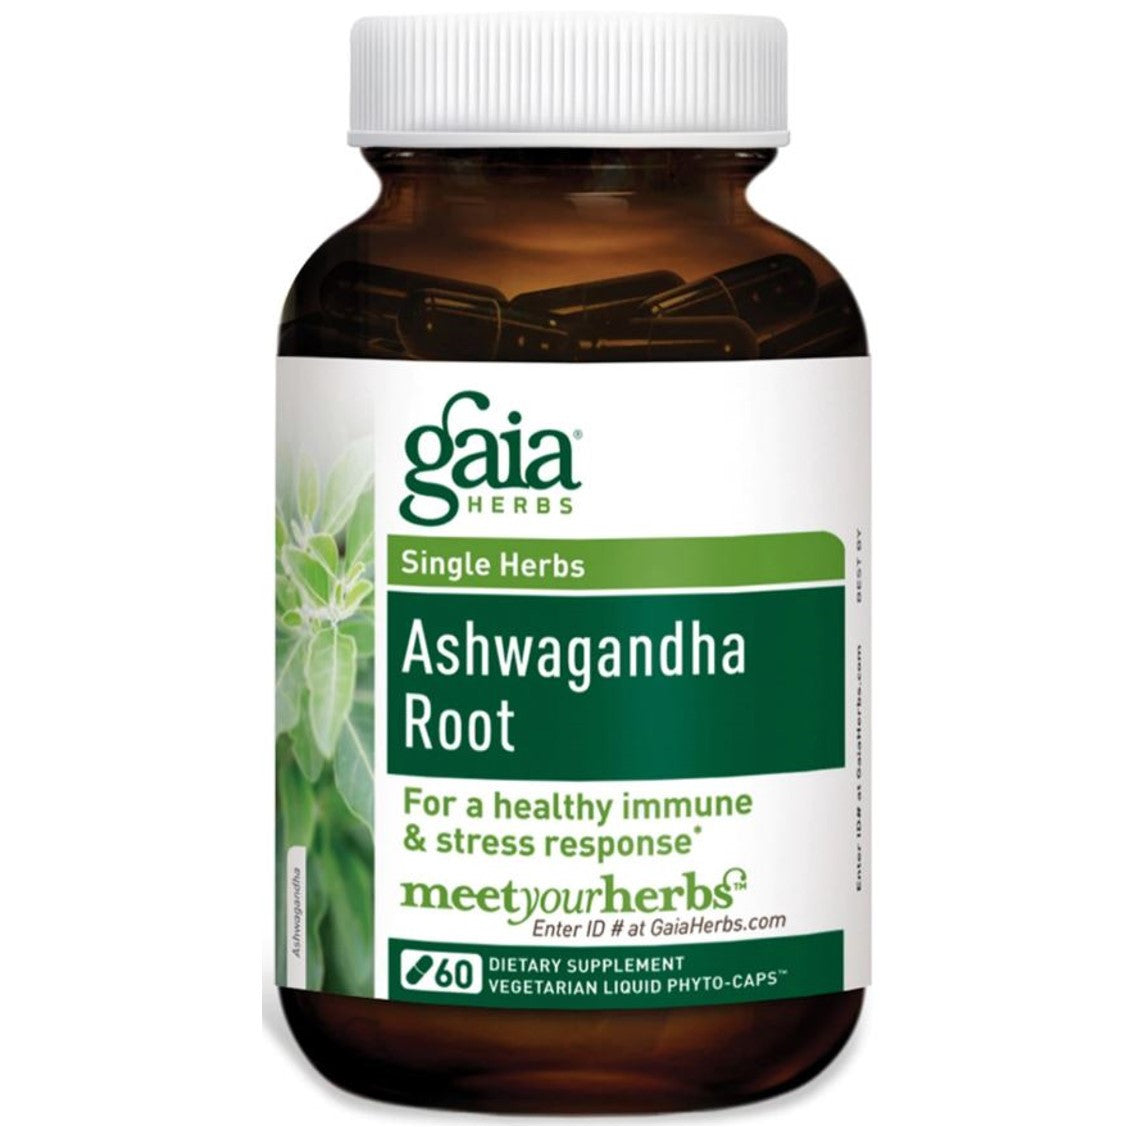 Gaia Herbs Ashwagandha Liquid Phyto-Caps, 60 caps.-NaturesWisdom